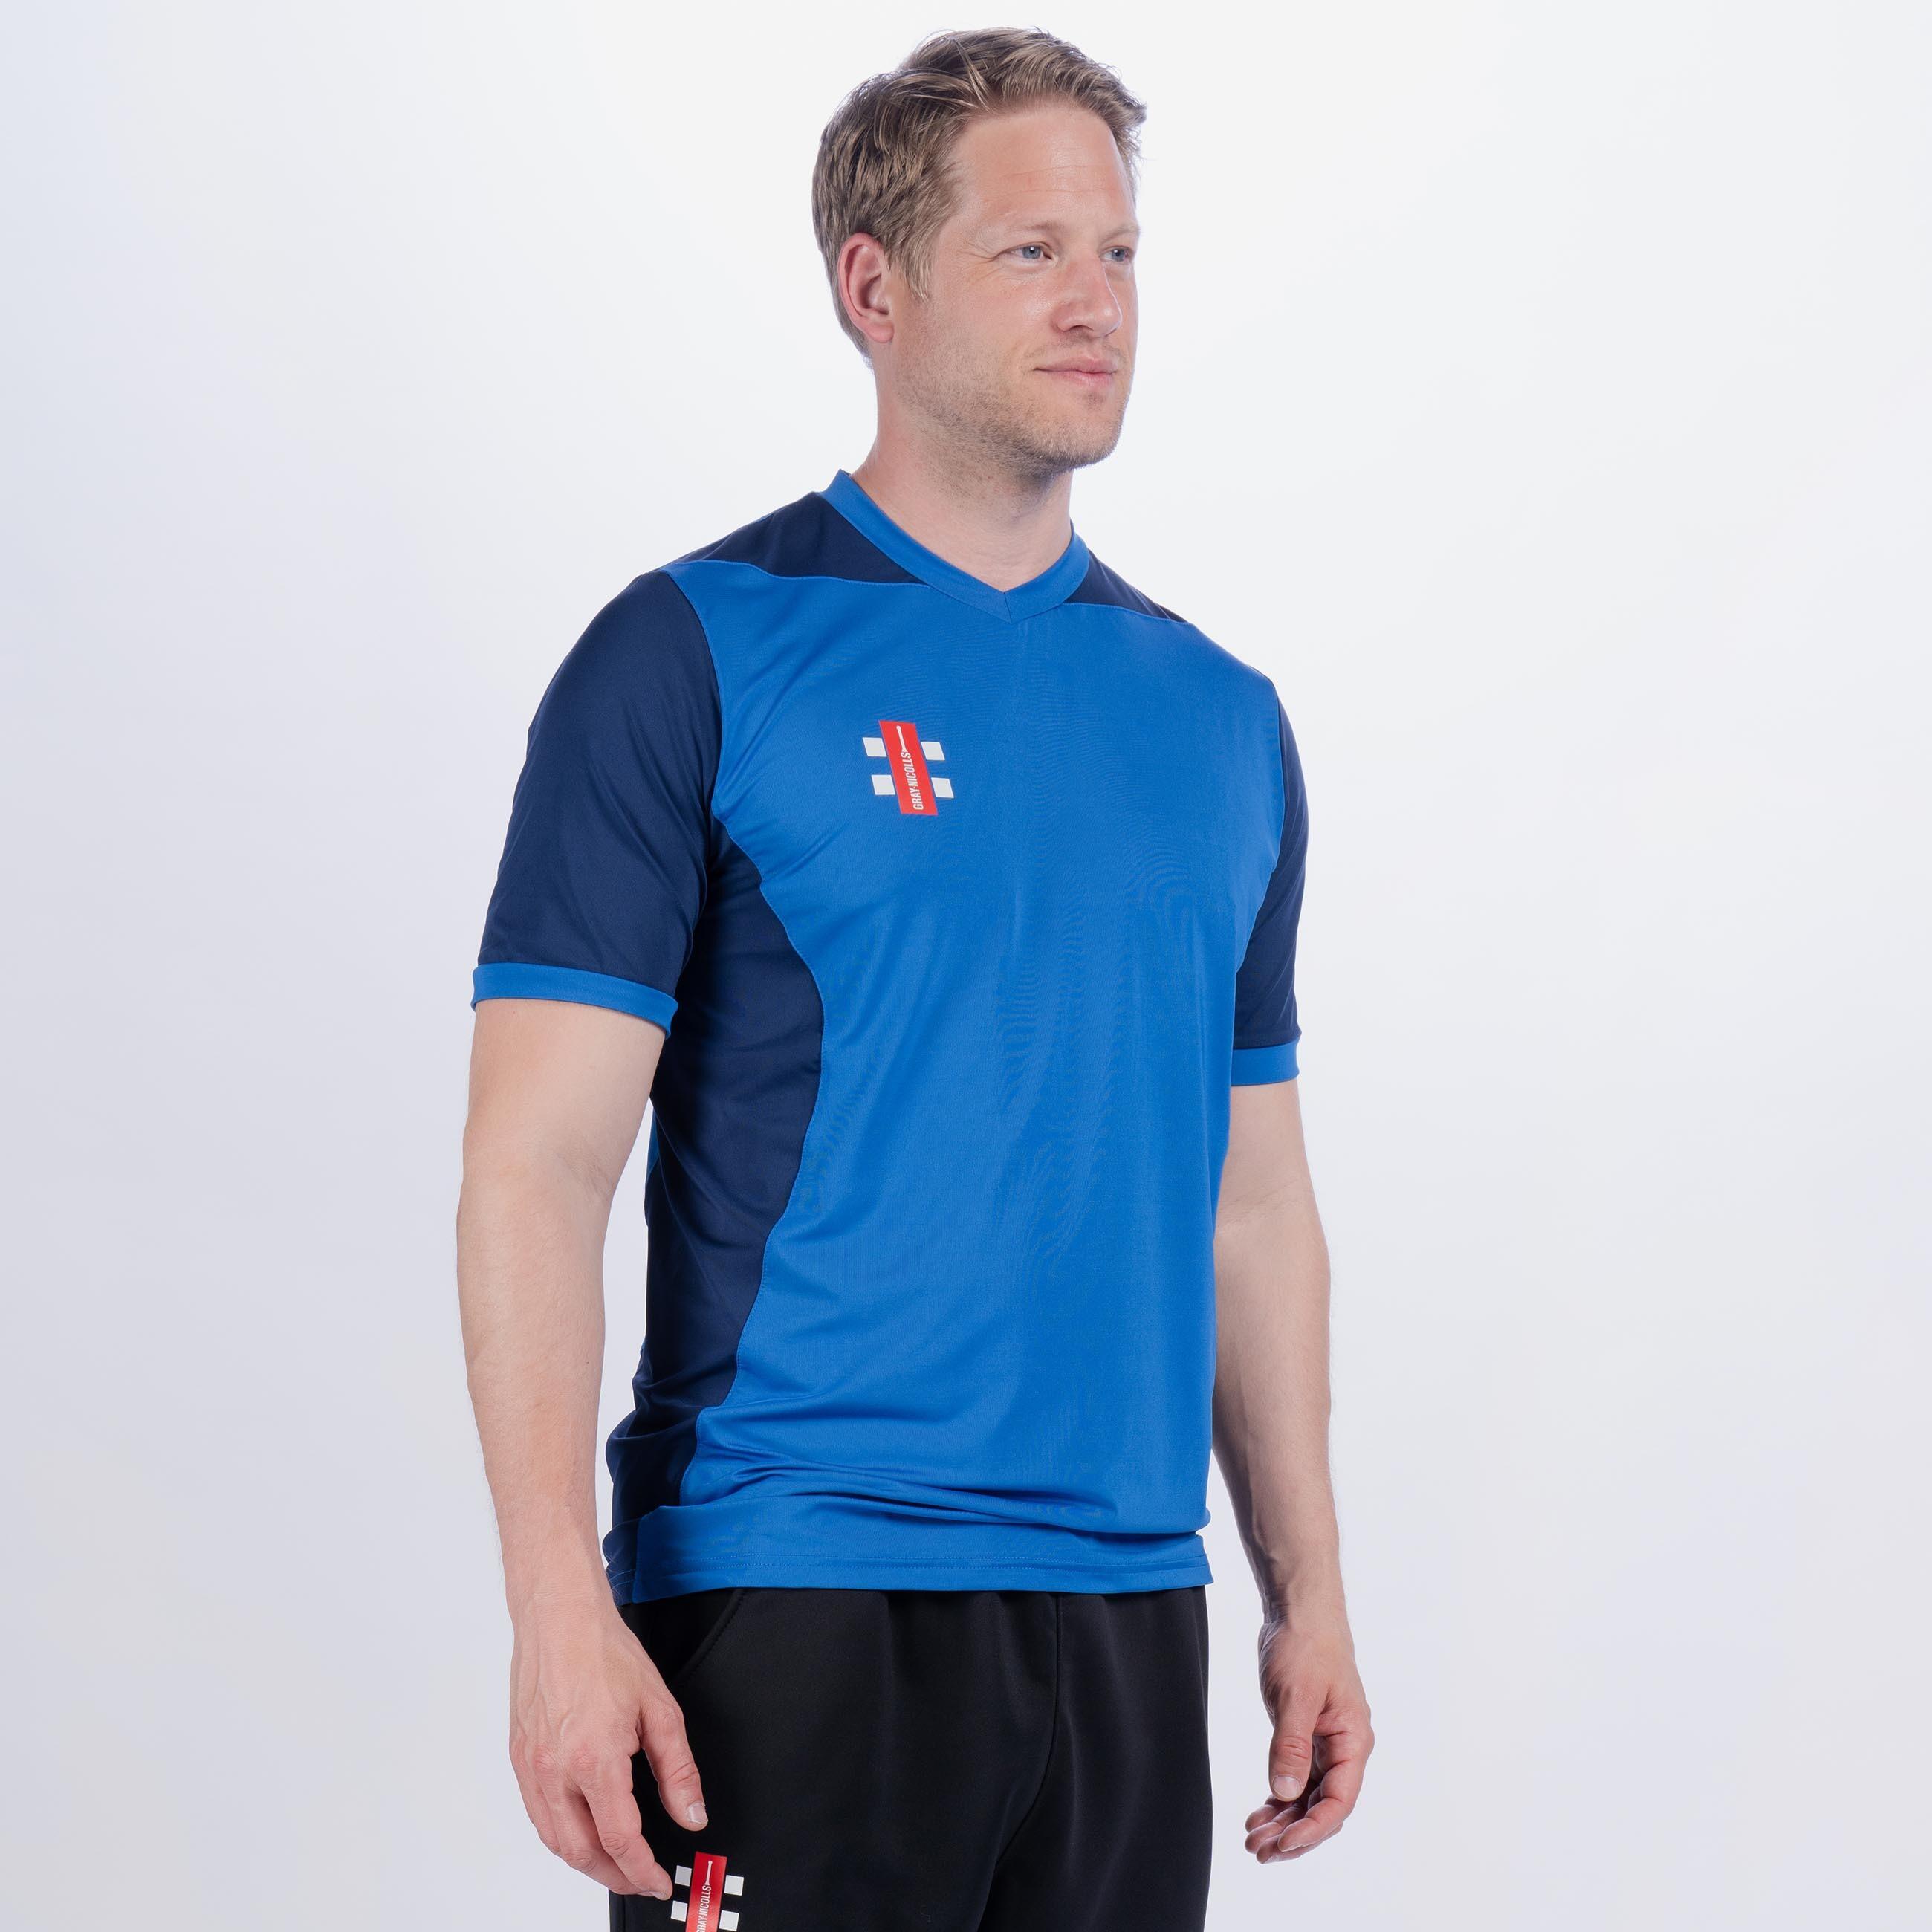 GRAY-NICOLLS Pro Performance T20 Short Sleeve Shirt, Royal / Navy, Adult